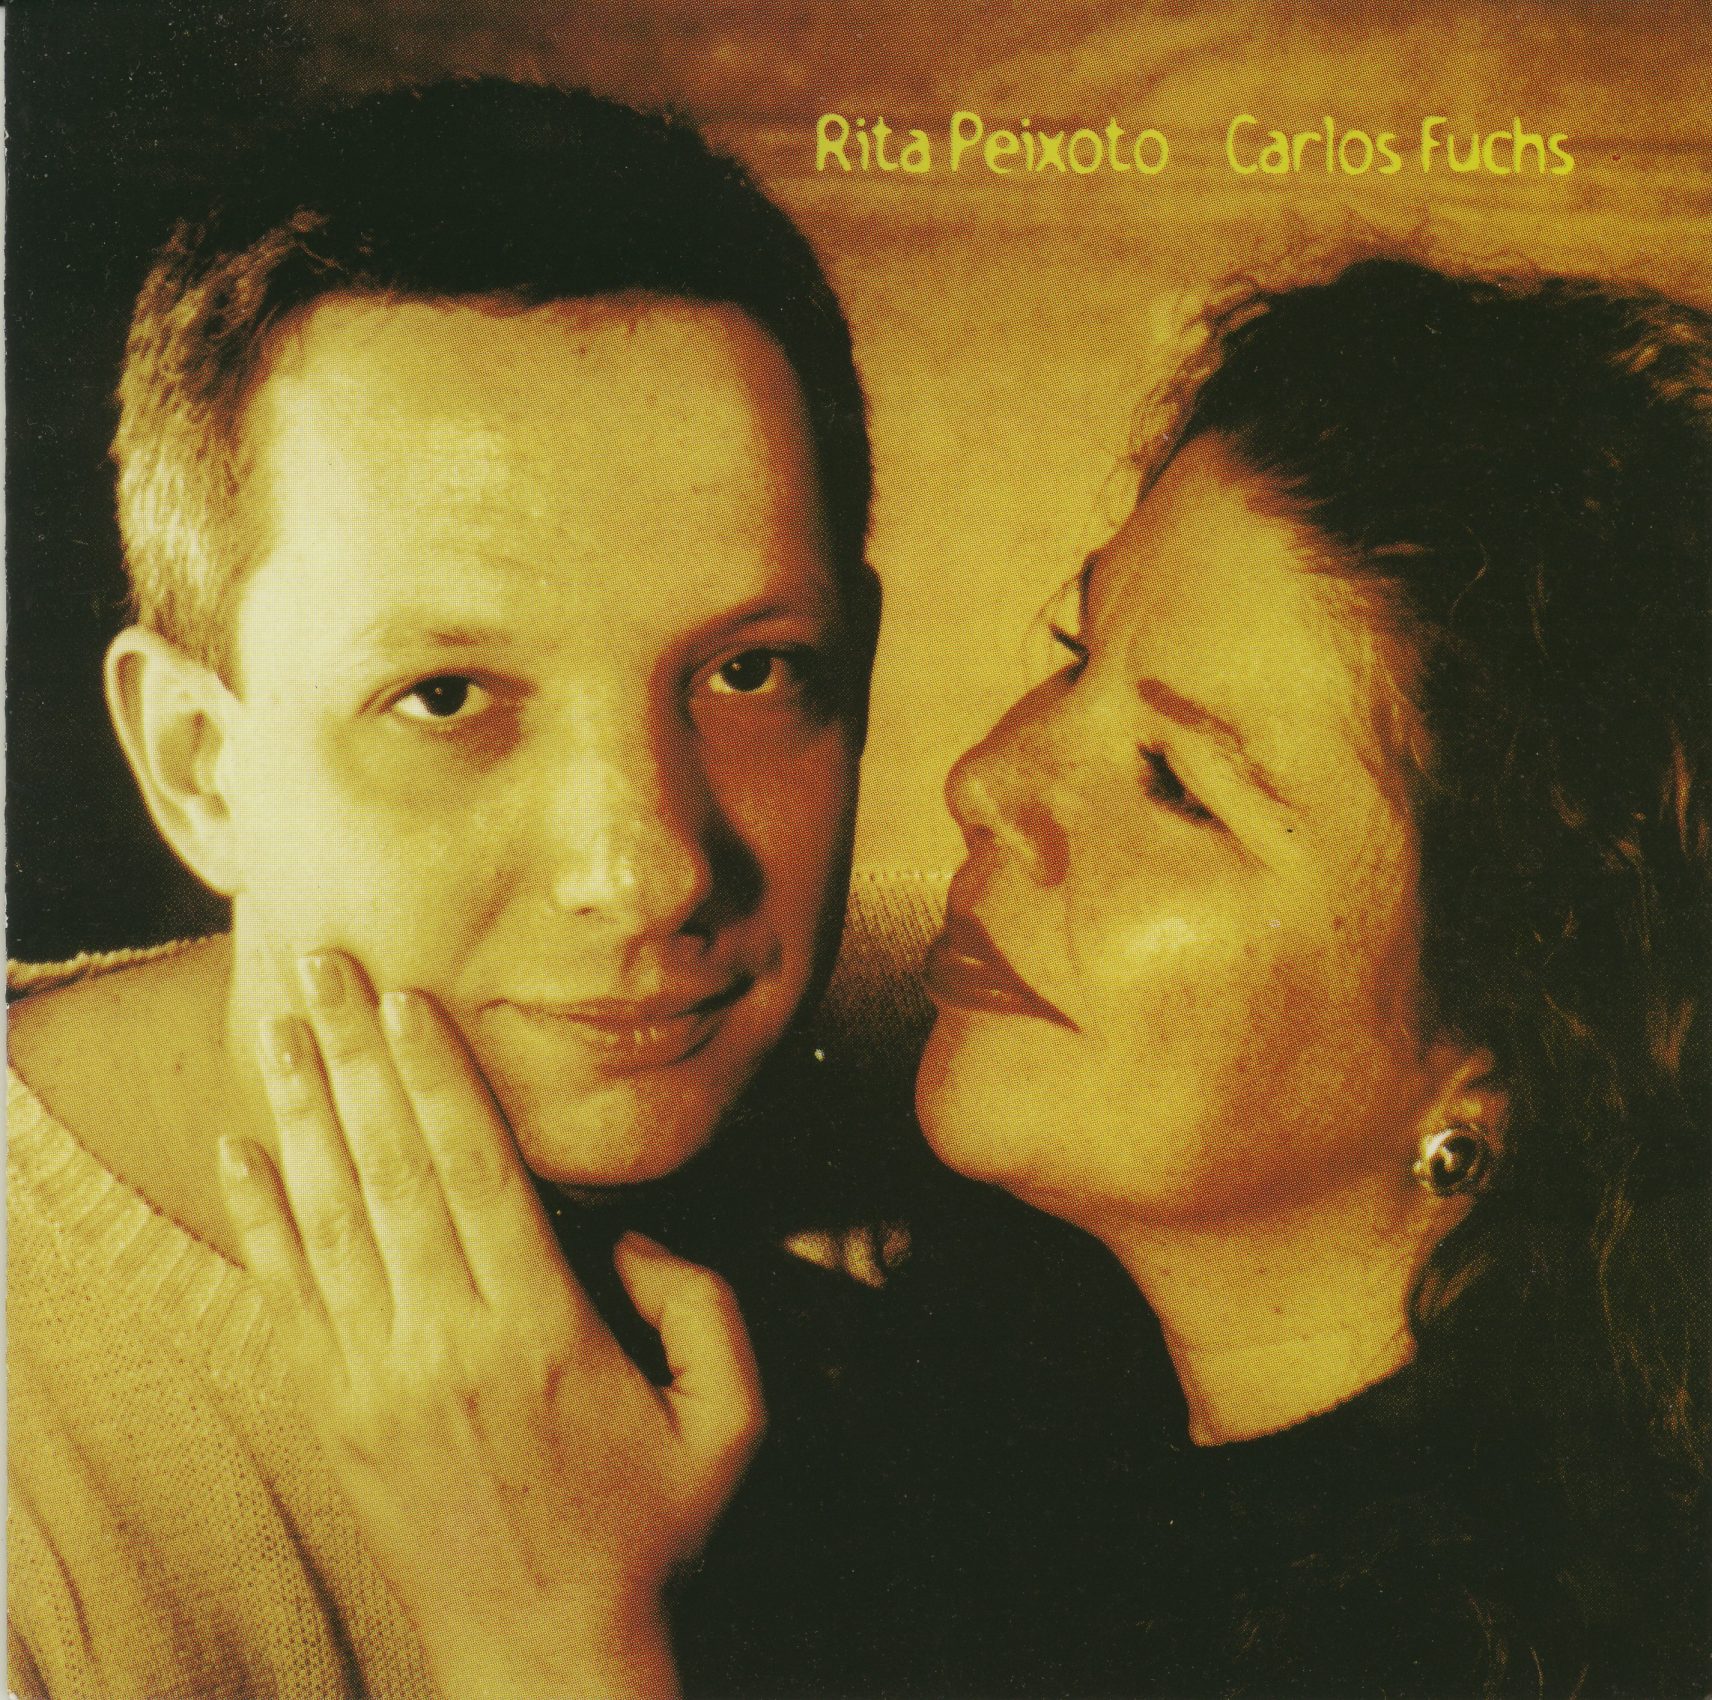 Rita Peixoto and Carlos Fuchs CD